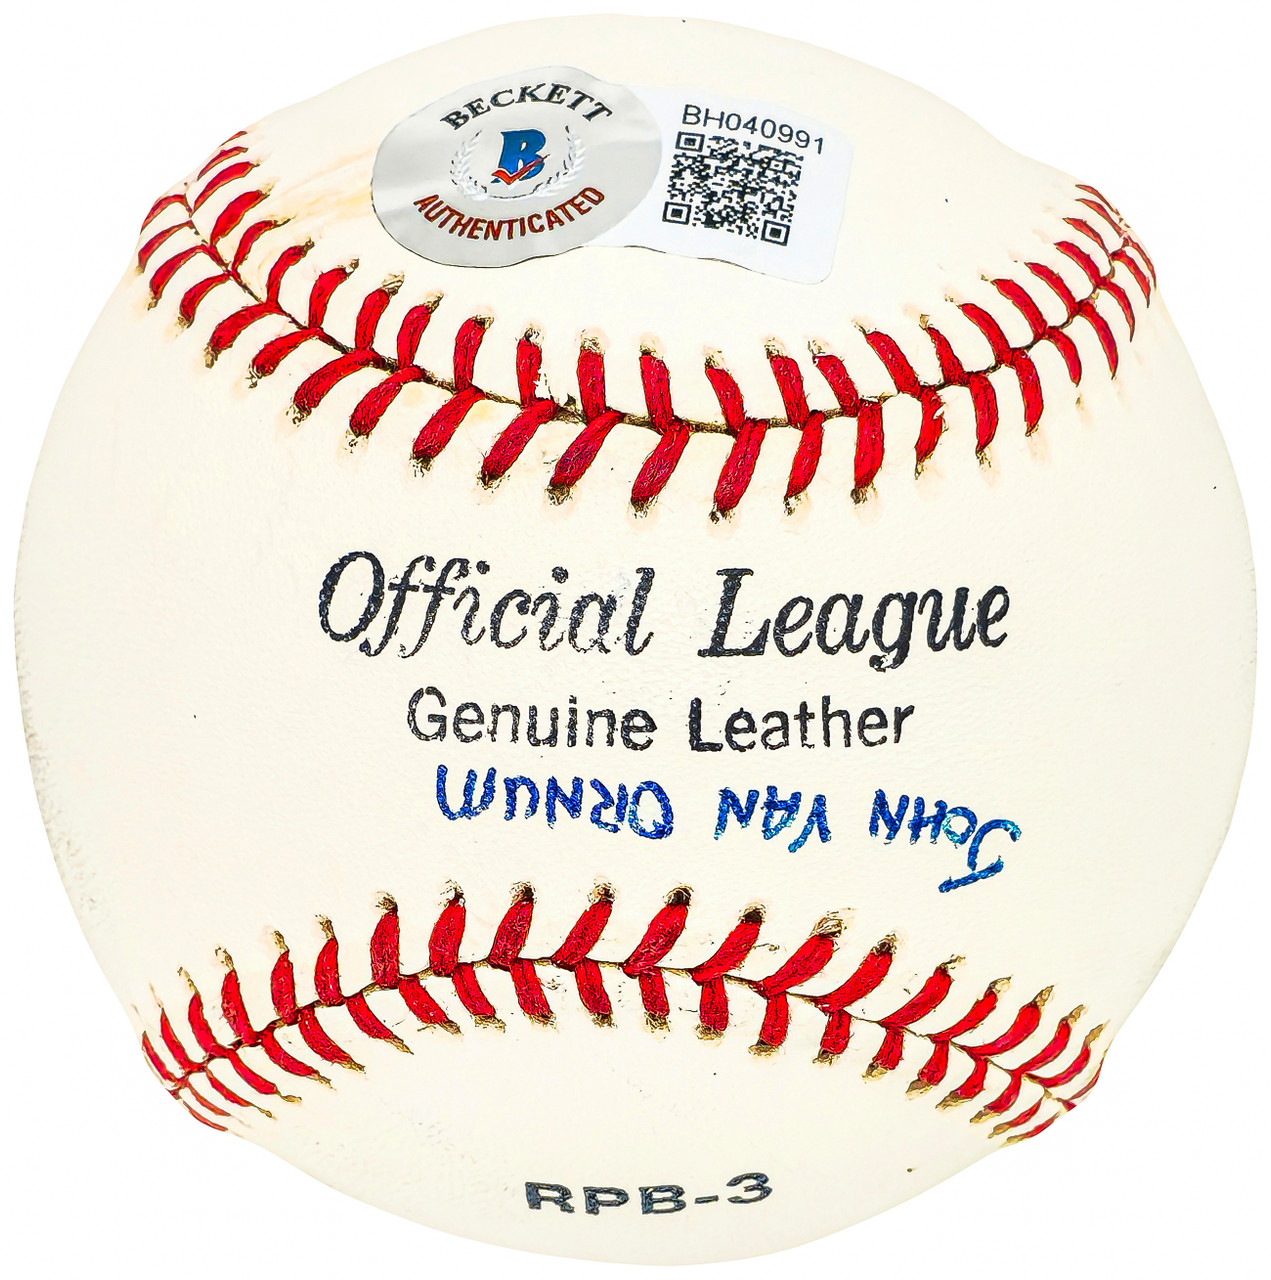 Orlando Cepeda Autographed Official NL Baseball San Francisco Giants  Beckett BAS QR #BH039040